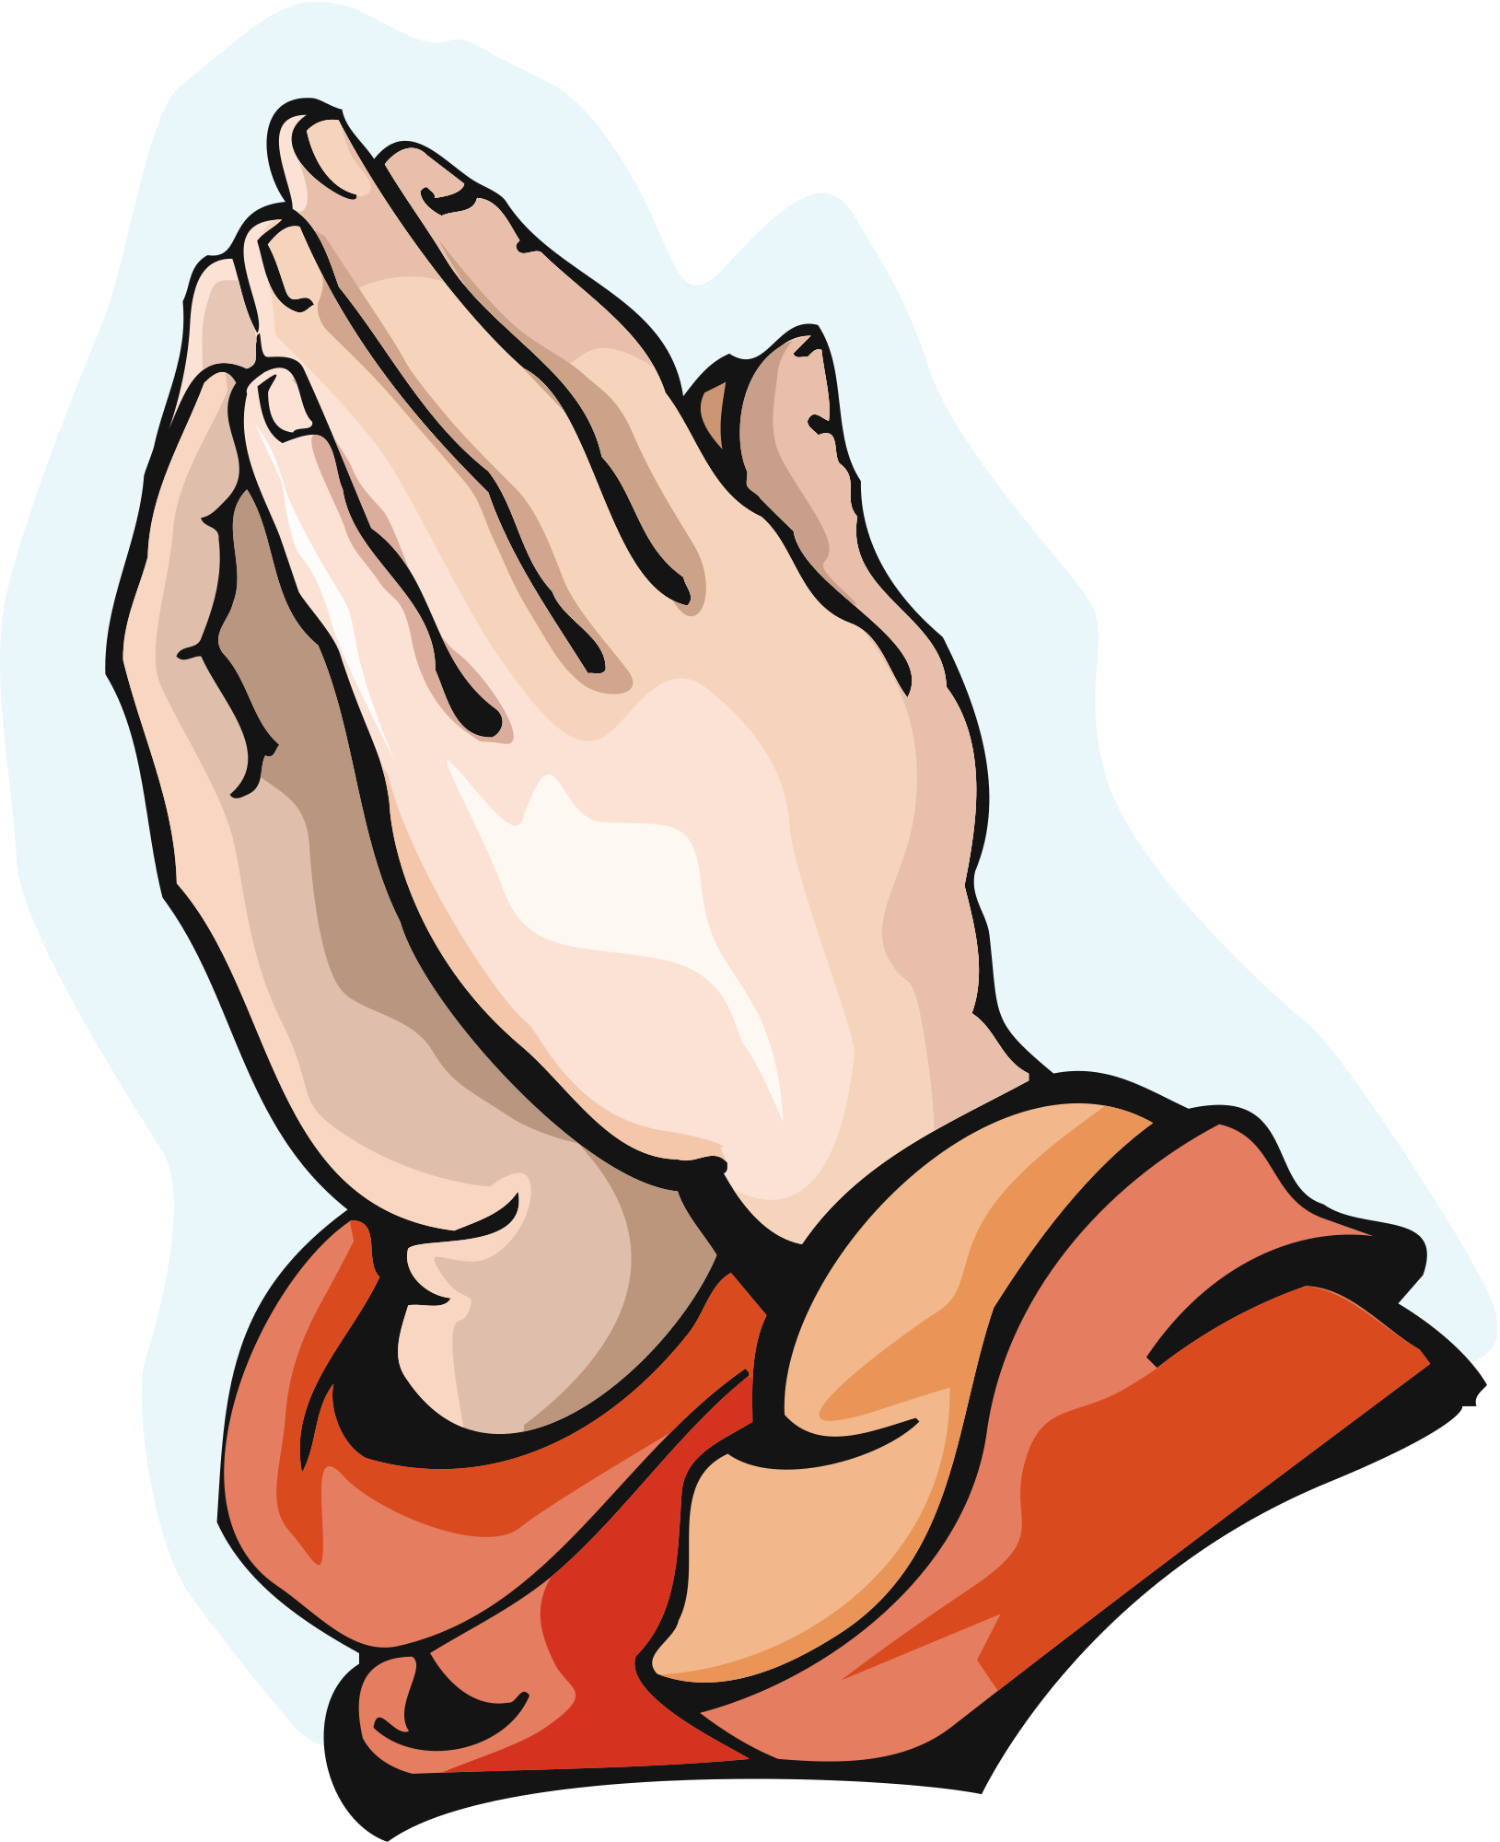 Children praying hands clipart